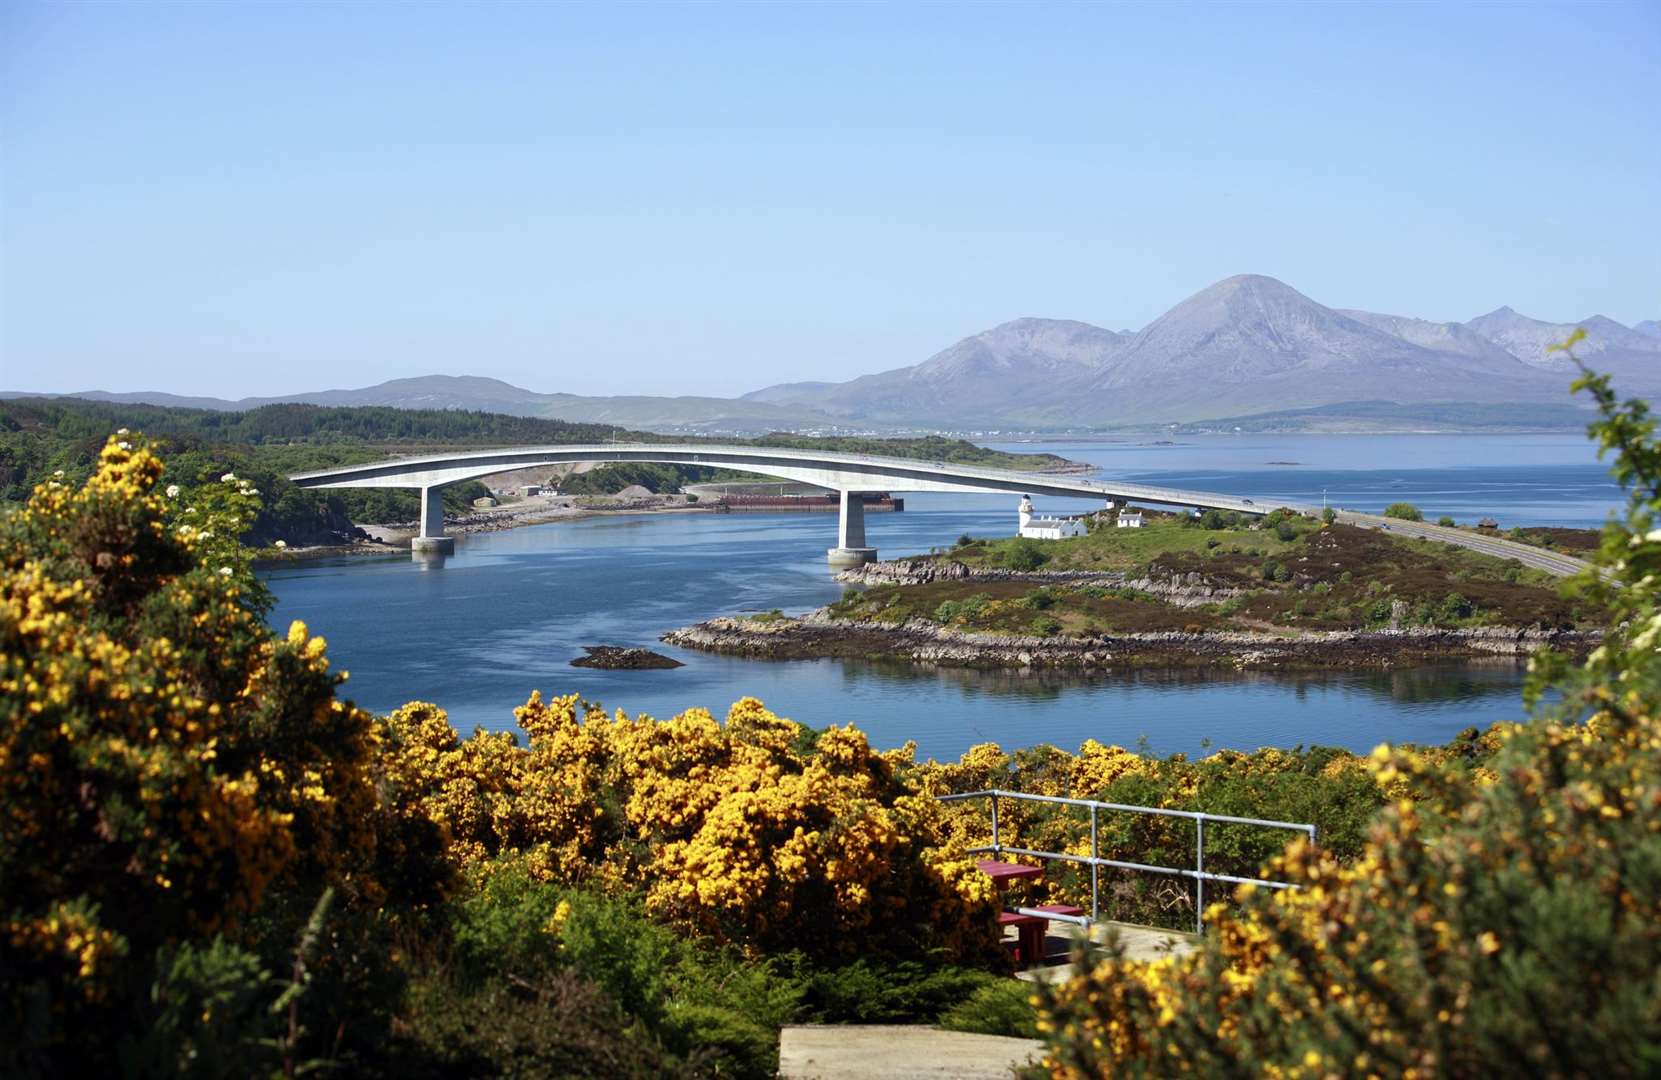 The Skye Bridge and Isle of Skye from Kyle of Lochalsh.